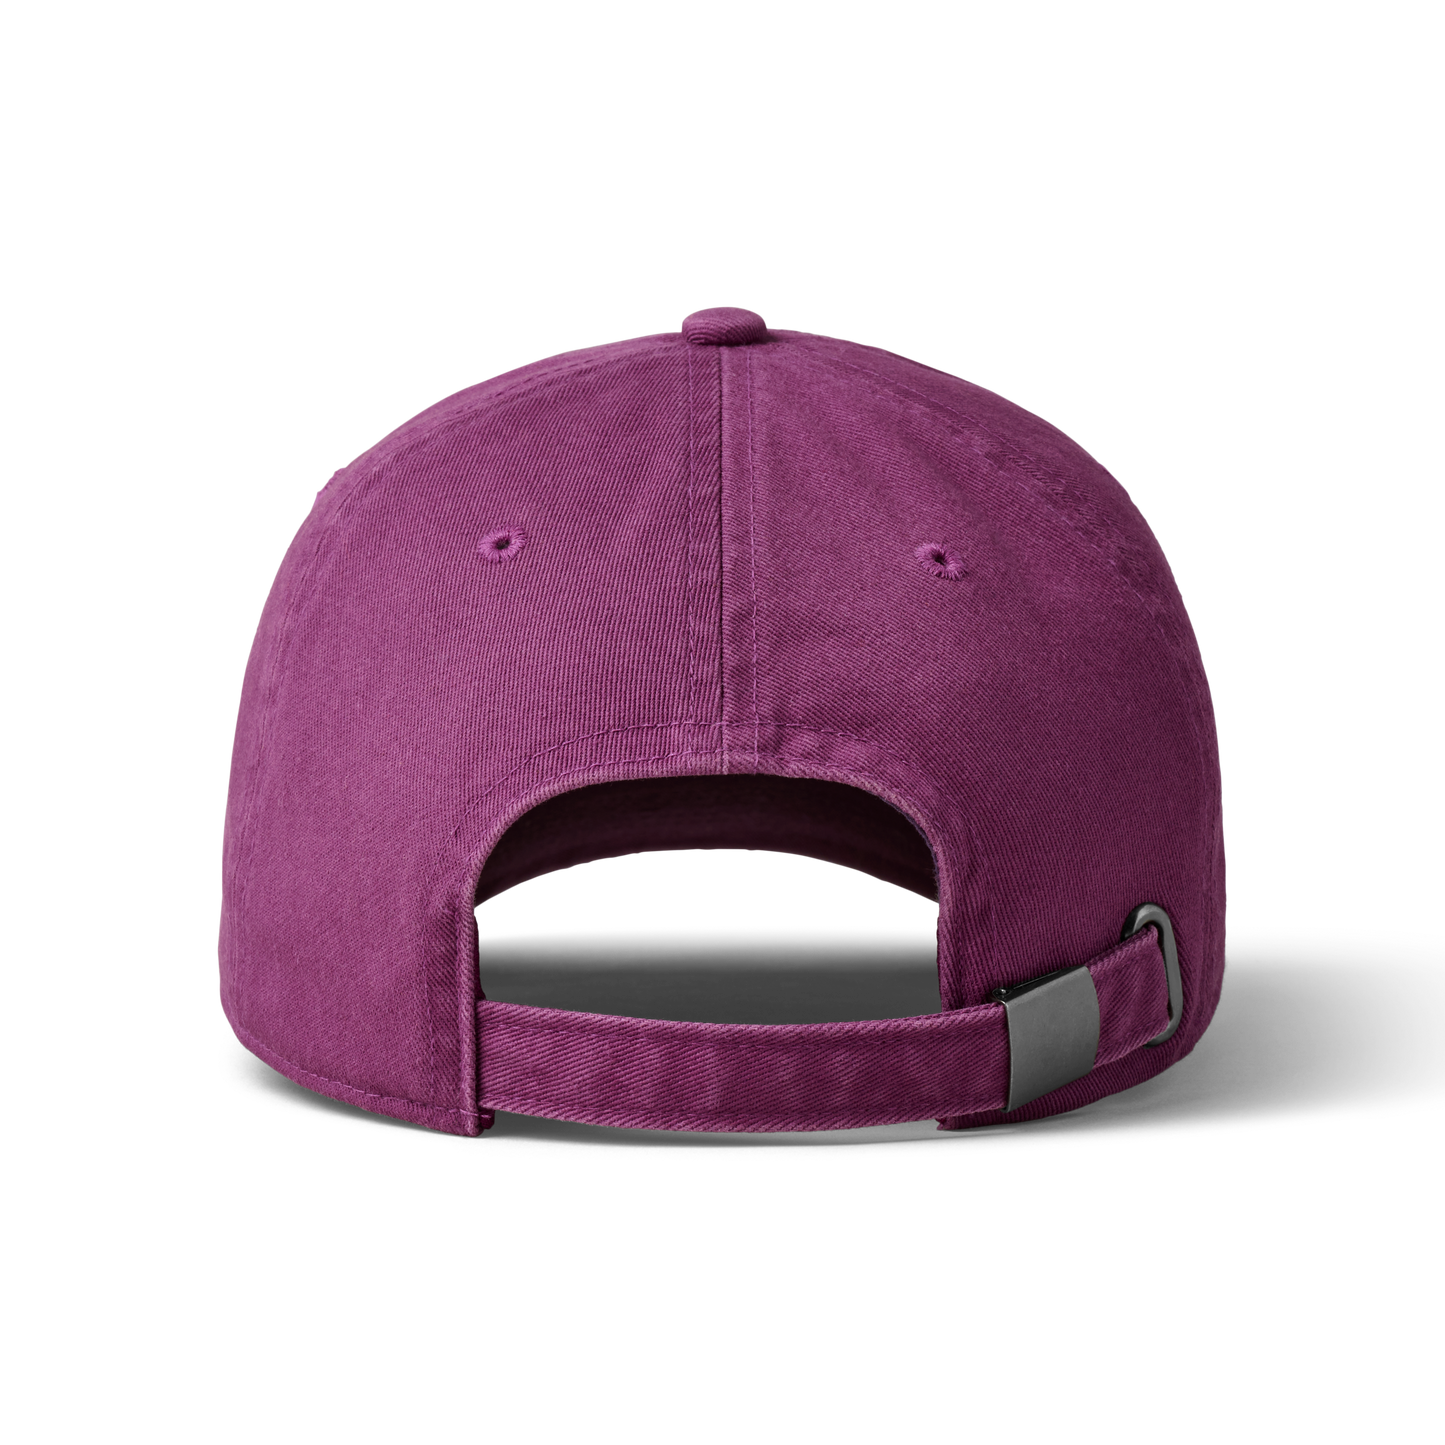 YETI Logo Baseball Cap Violet